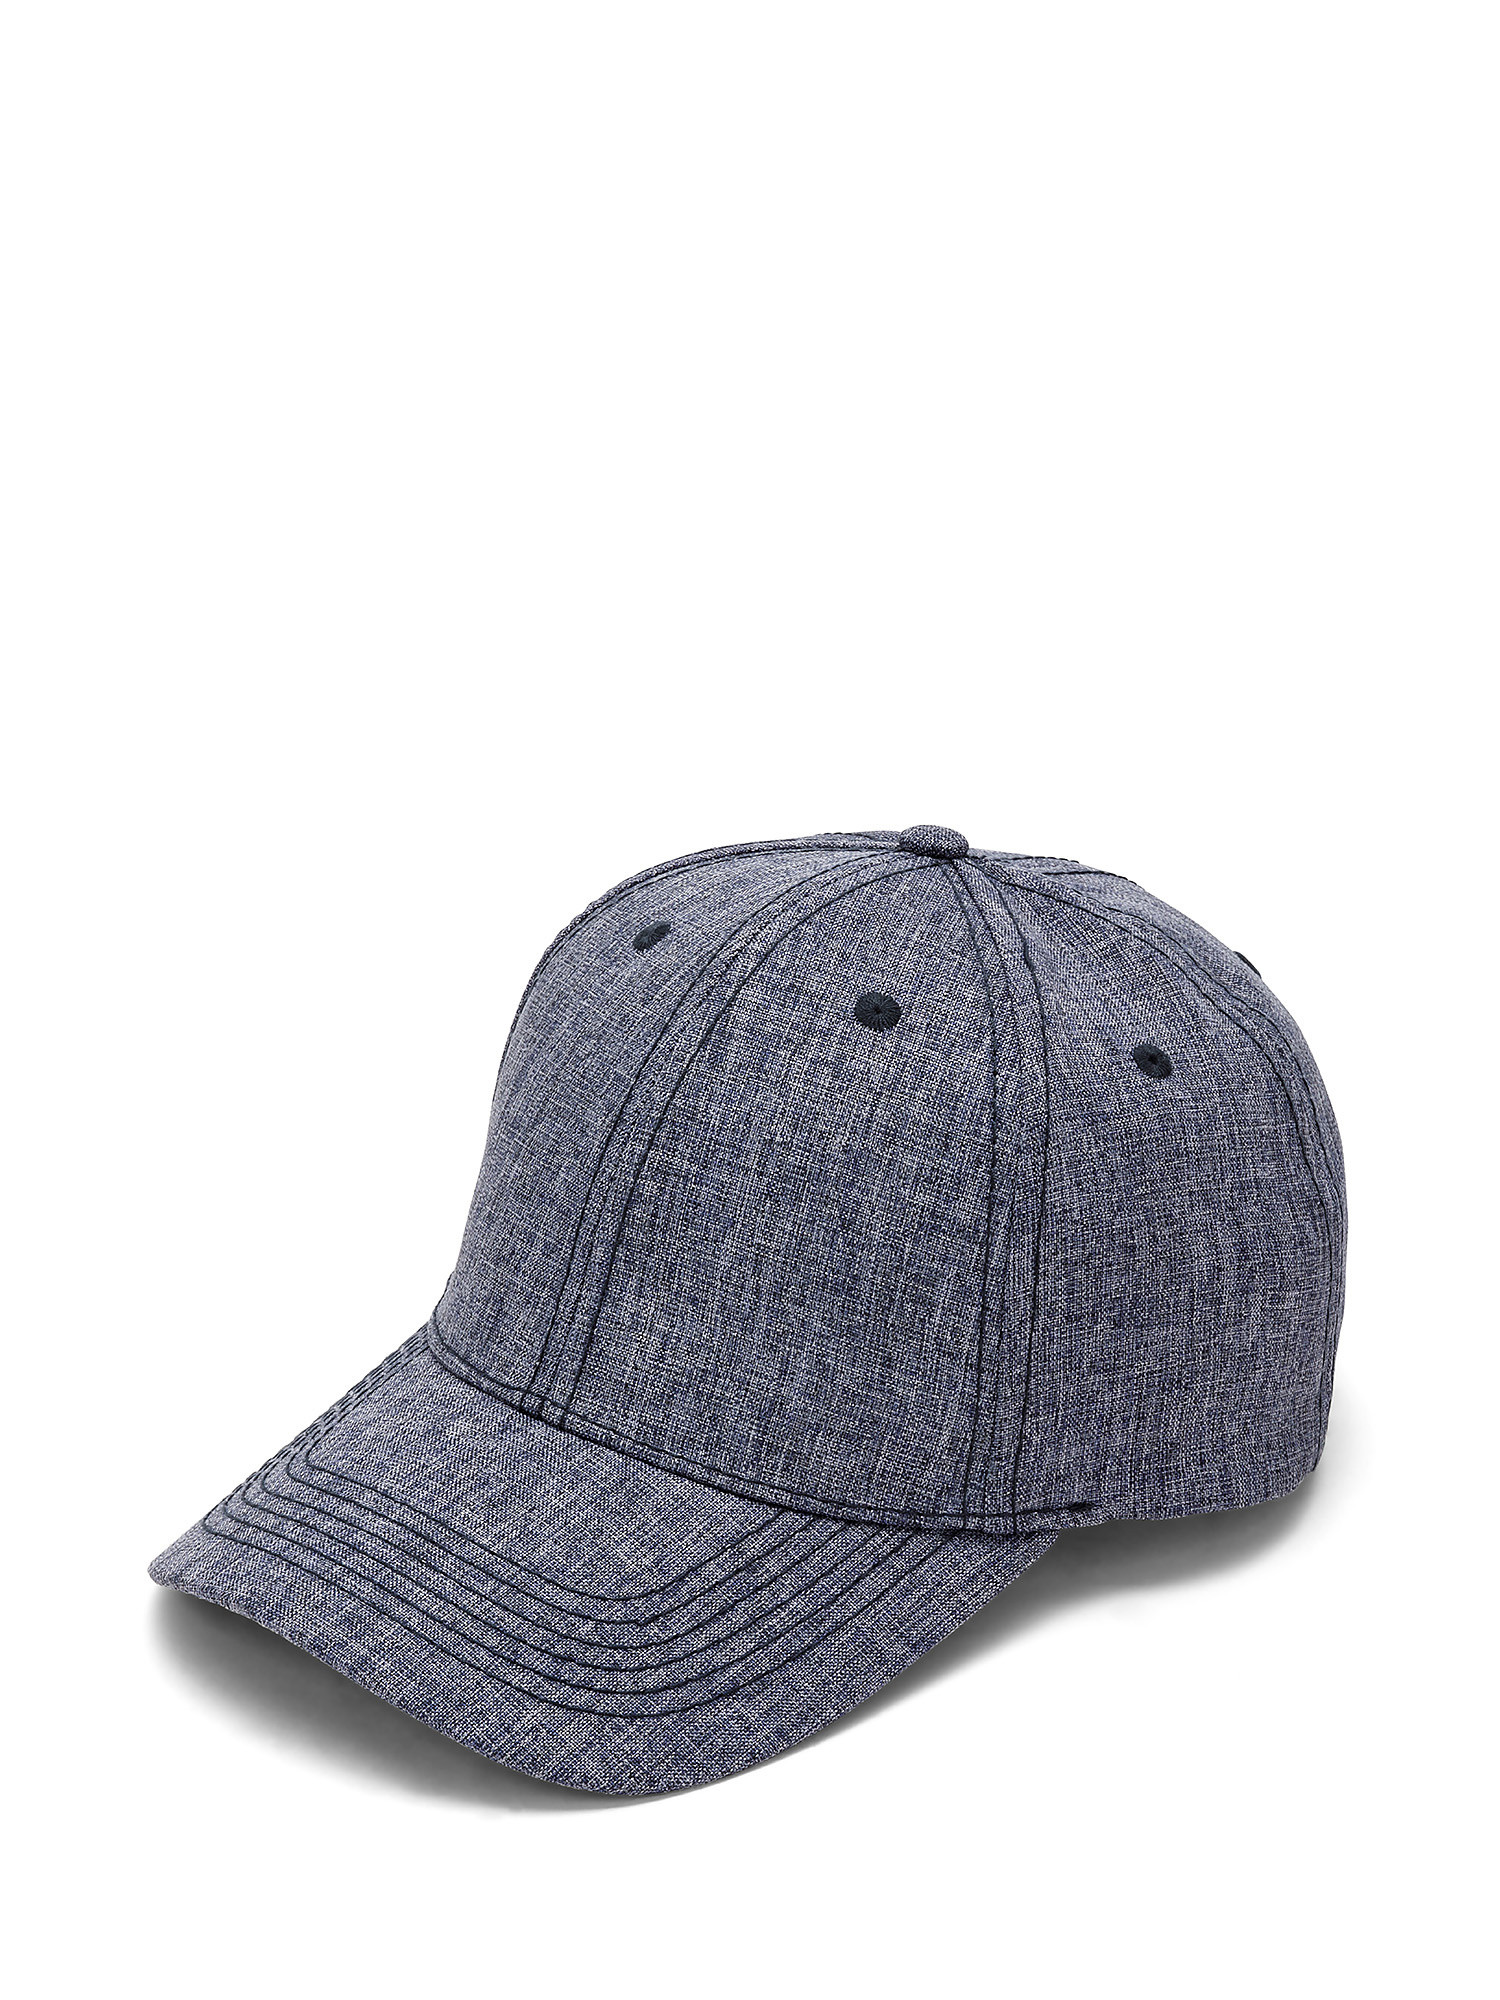 Luca D'Altieri - Baseball cap, Dark Blue, large image number 0